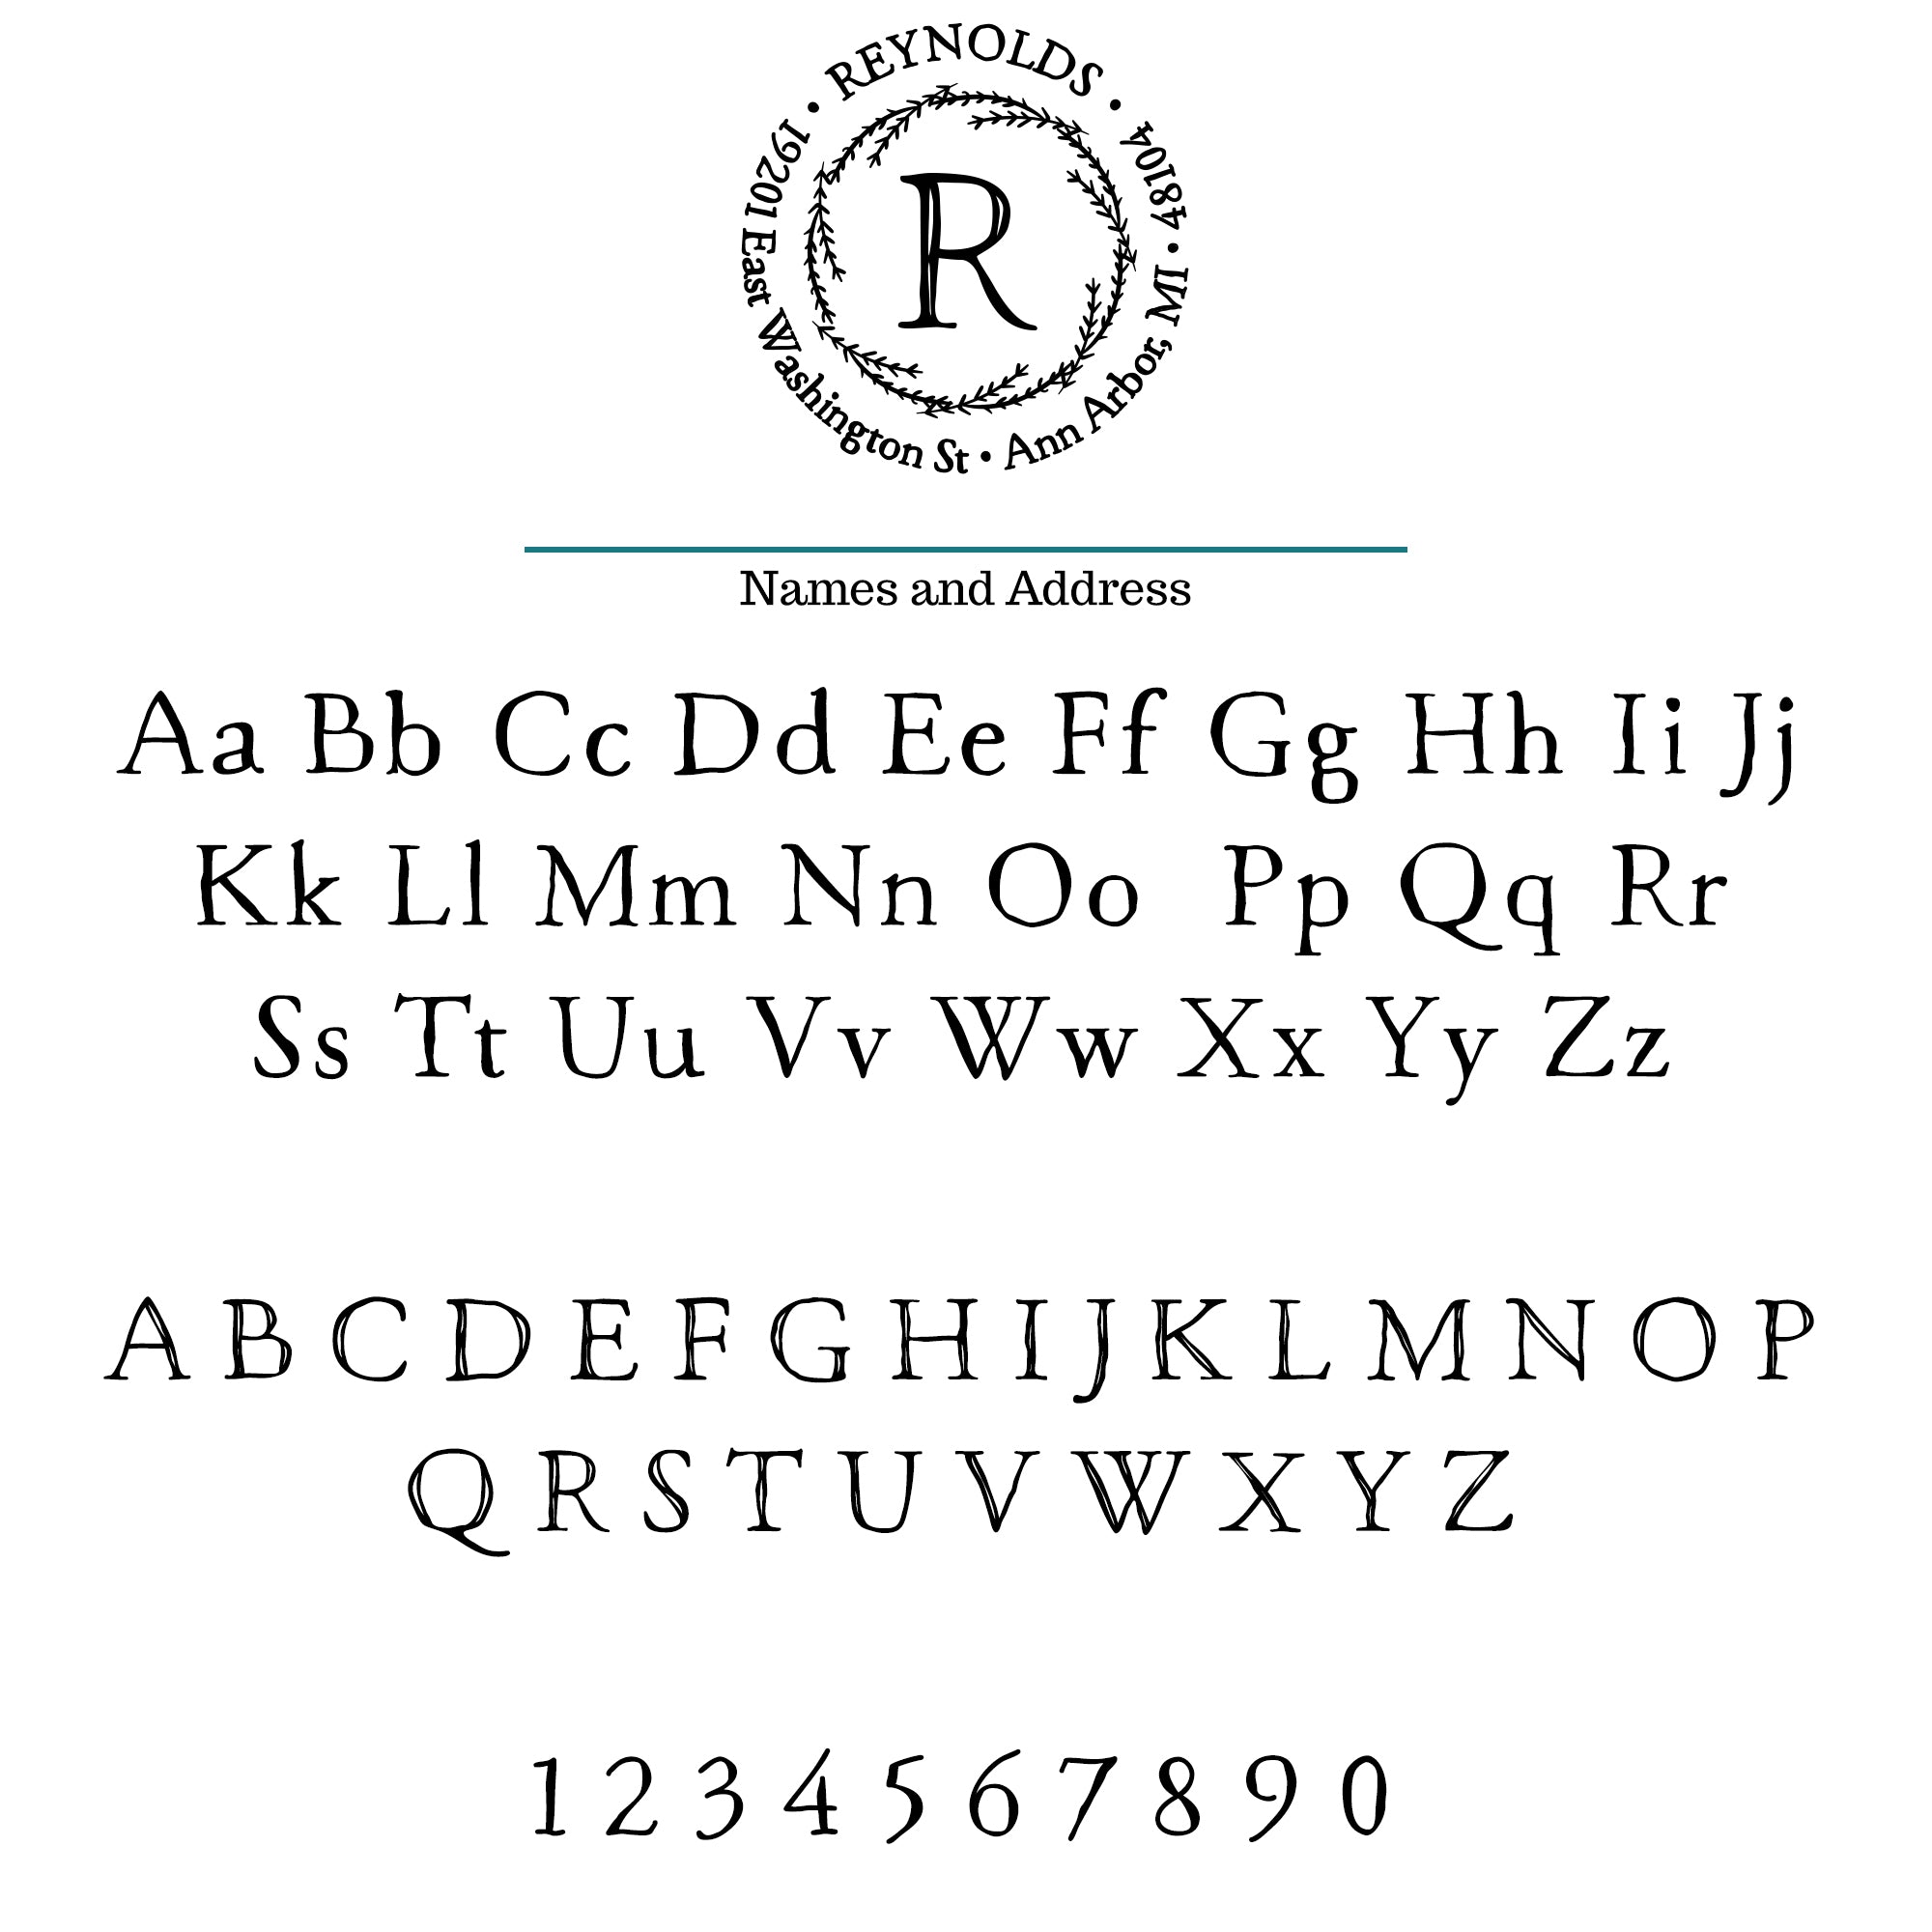 Rustic Monogram Return Address Stamp - A16